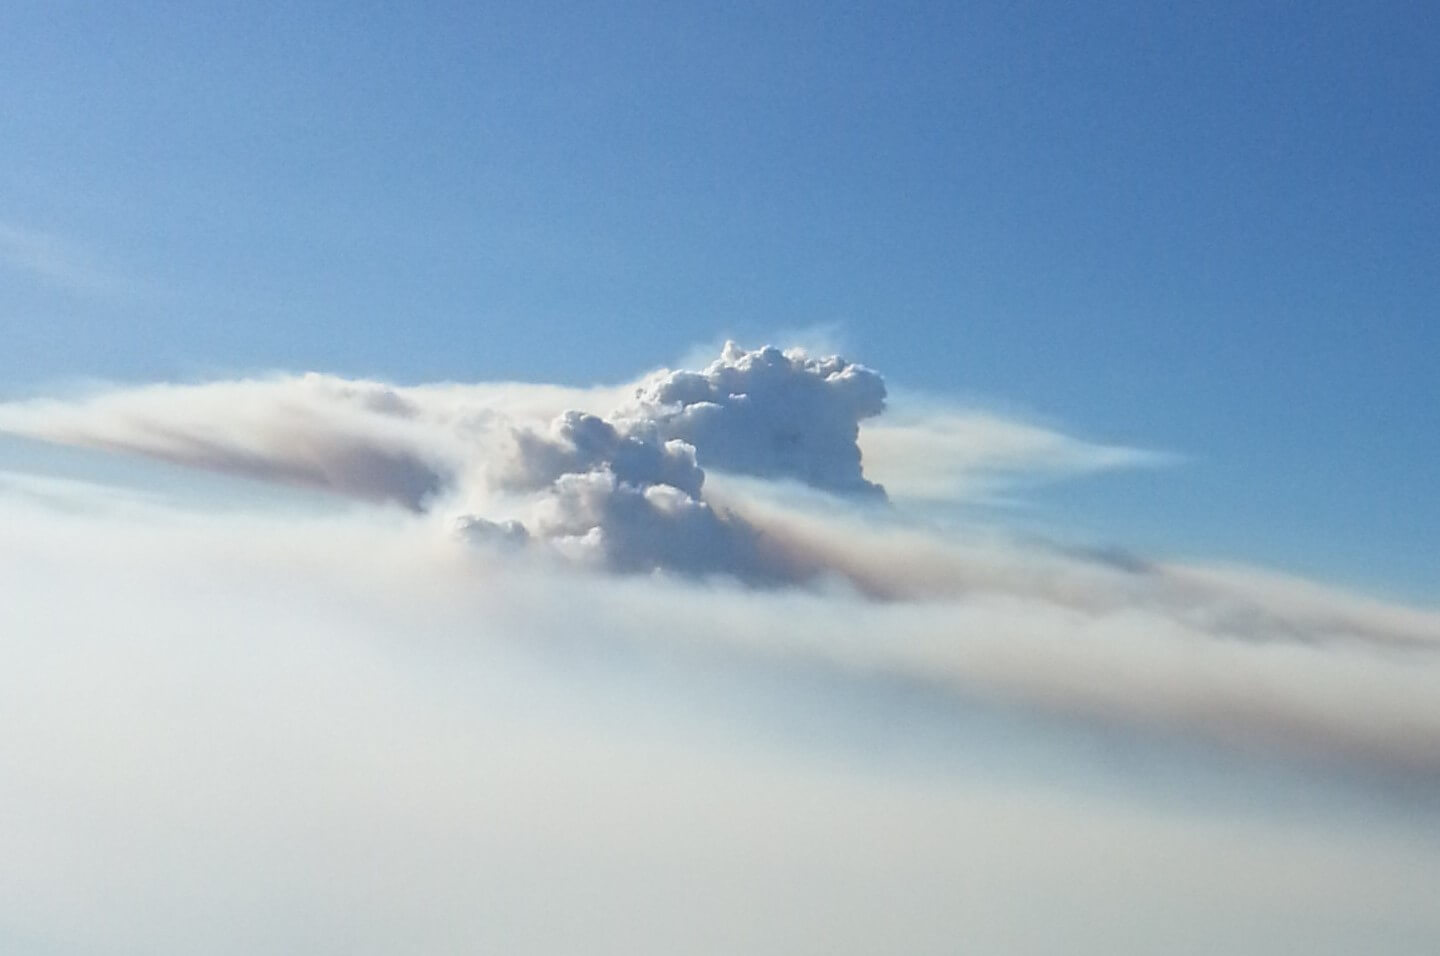 Smoke plume above clouds, Indi Range